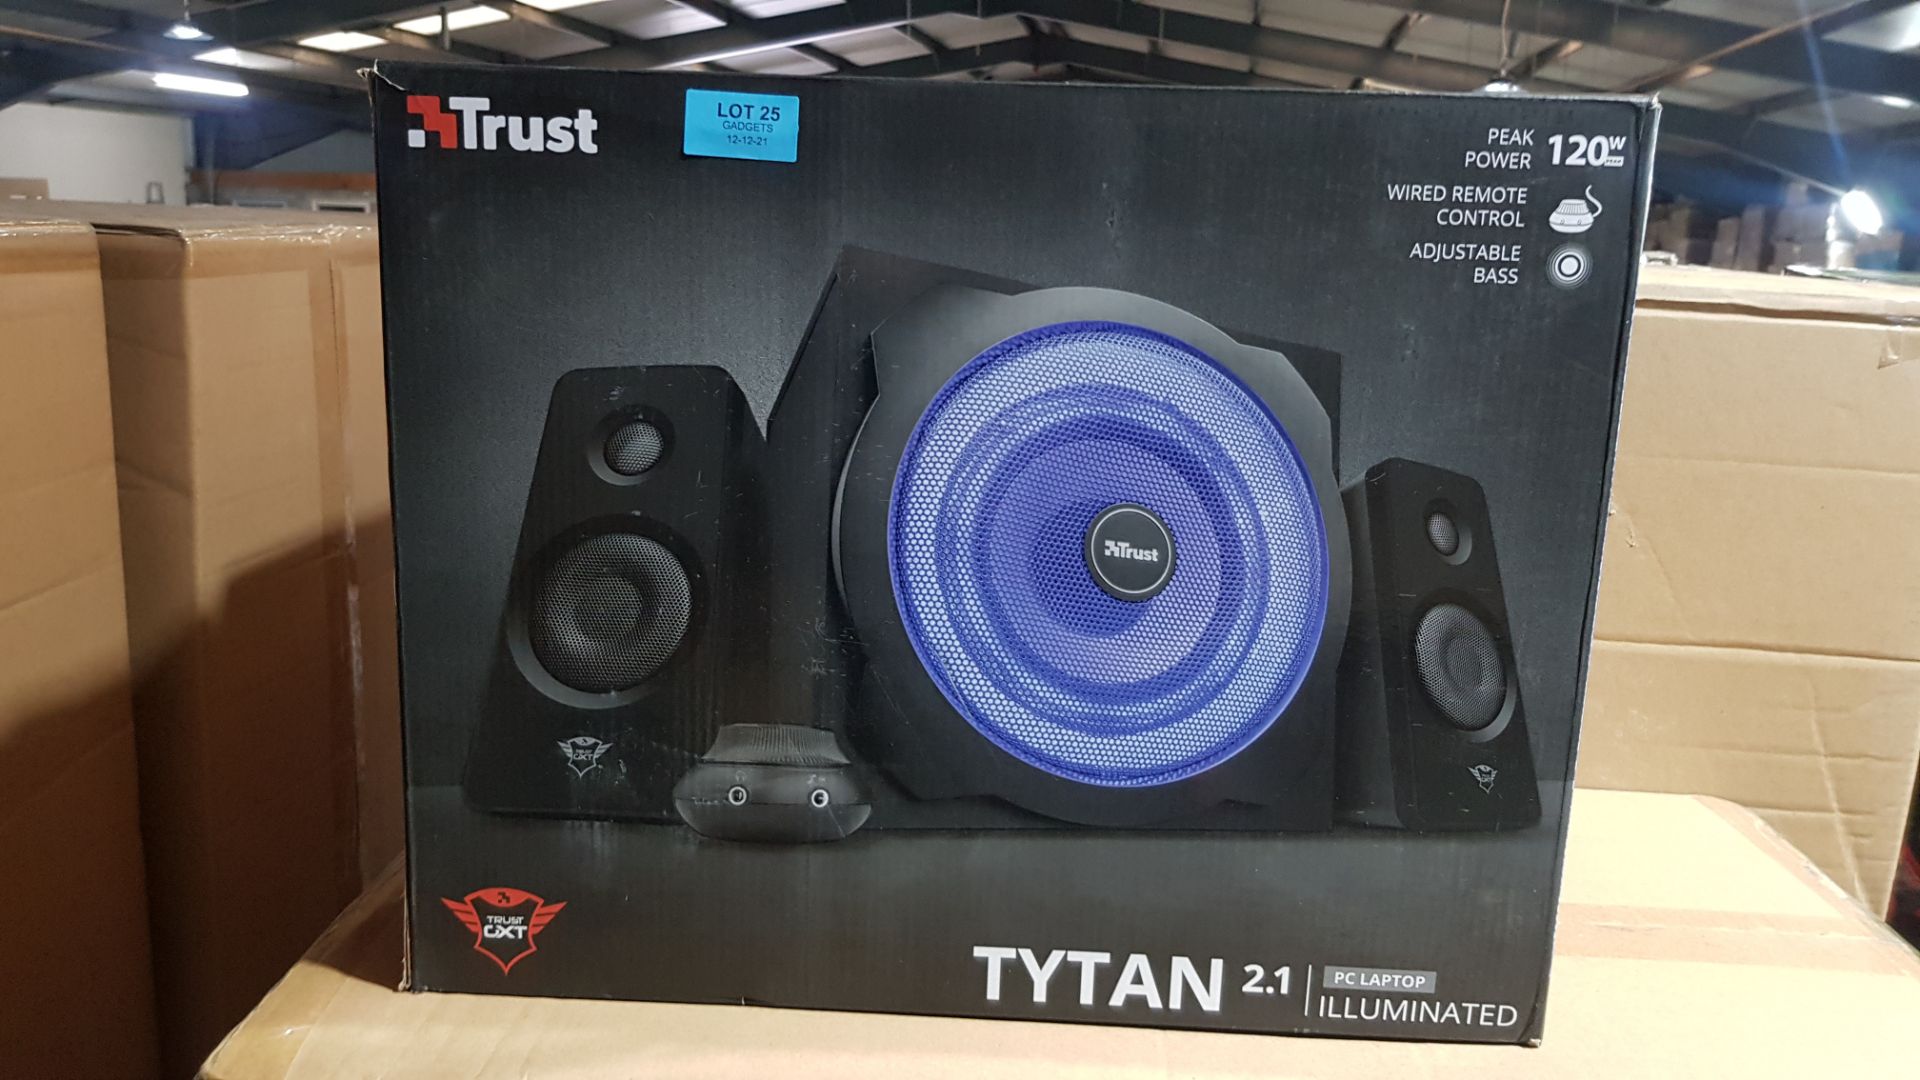 (P1) 1x Trust GXT Tytan 2.1 PC Laptop Illuminated Speaker RRP £89. (Unit Has Return To Manufacture - Image 2 of 2